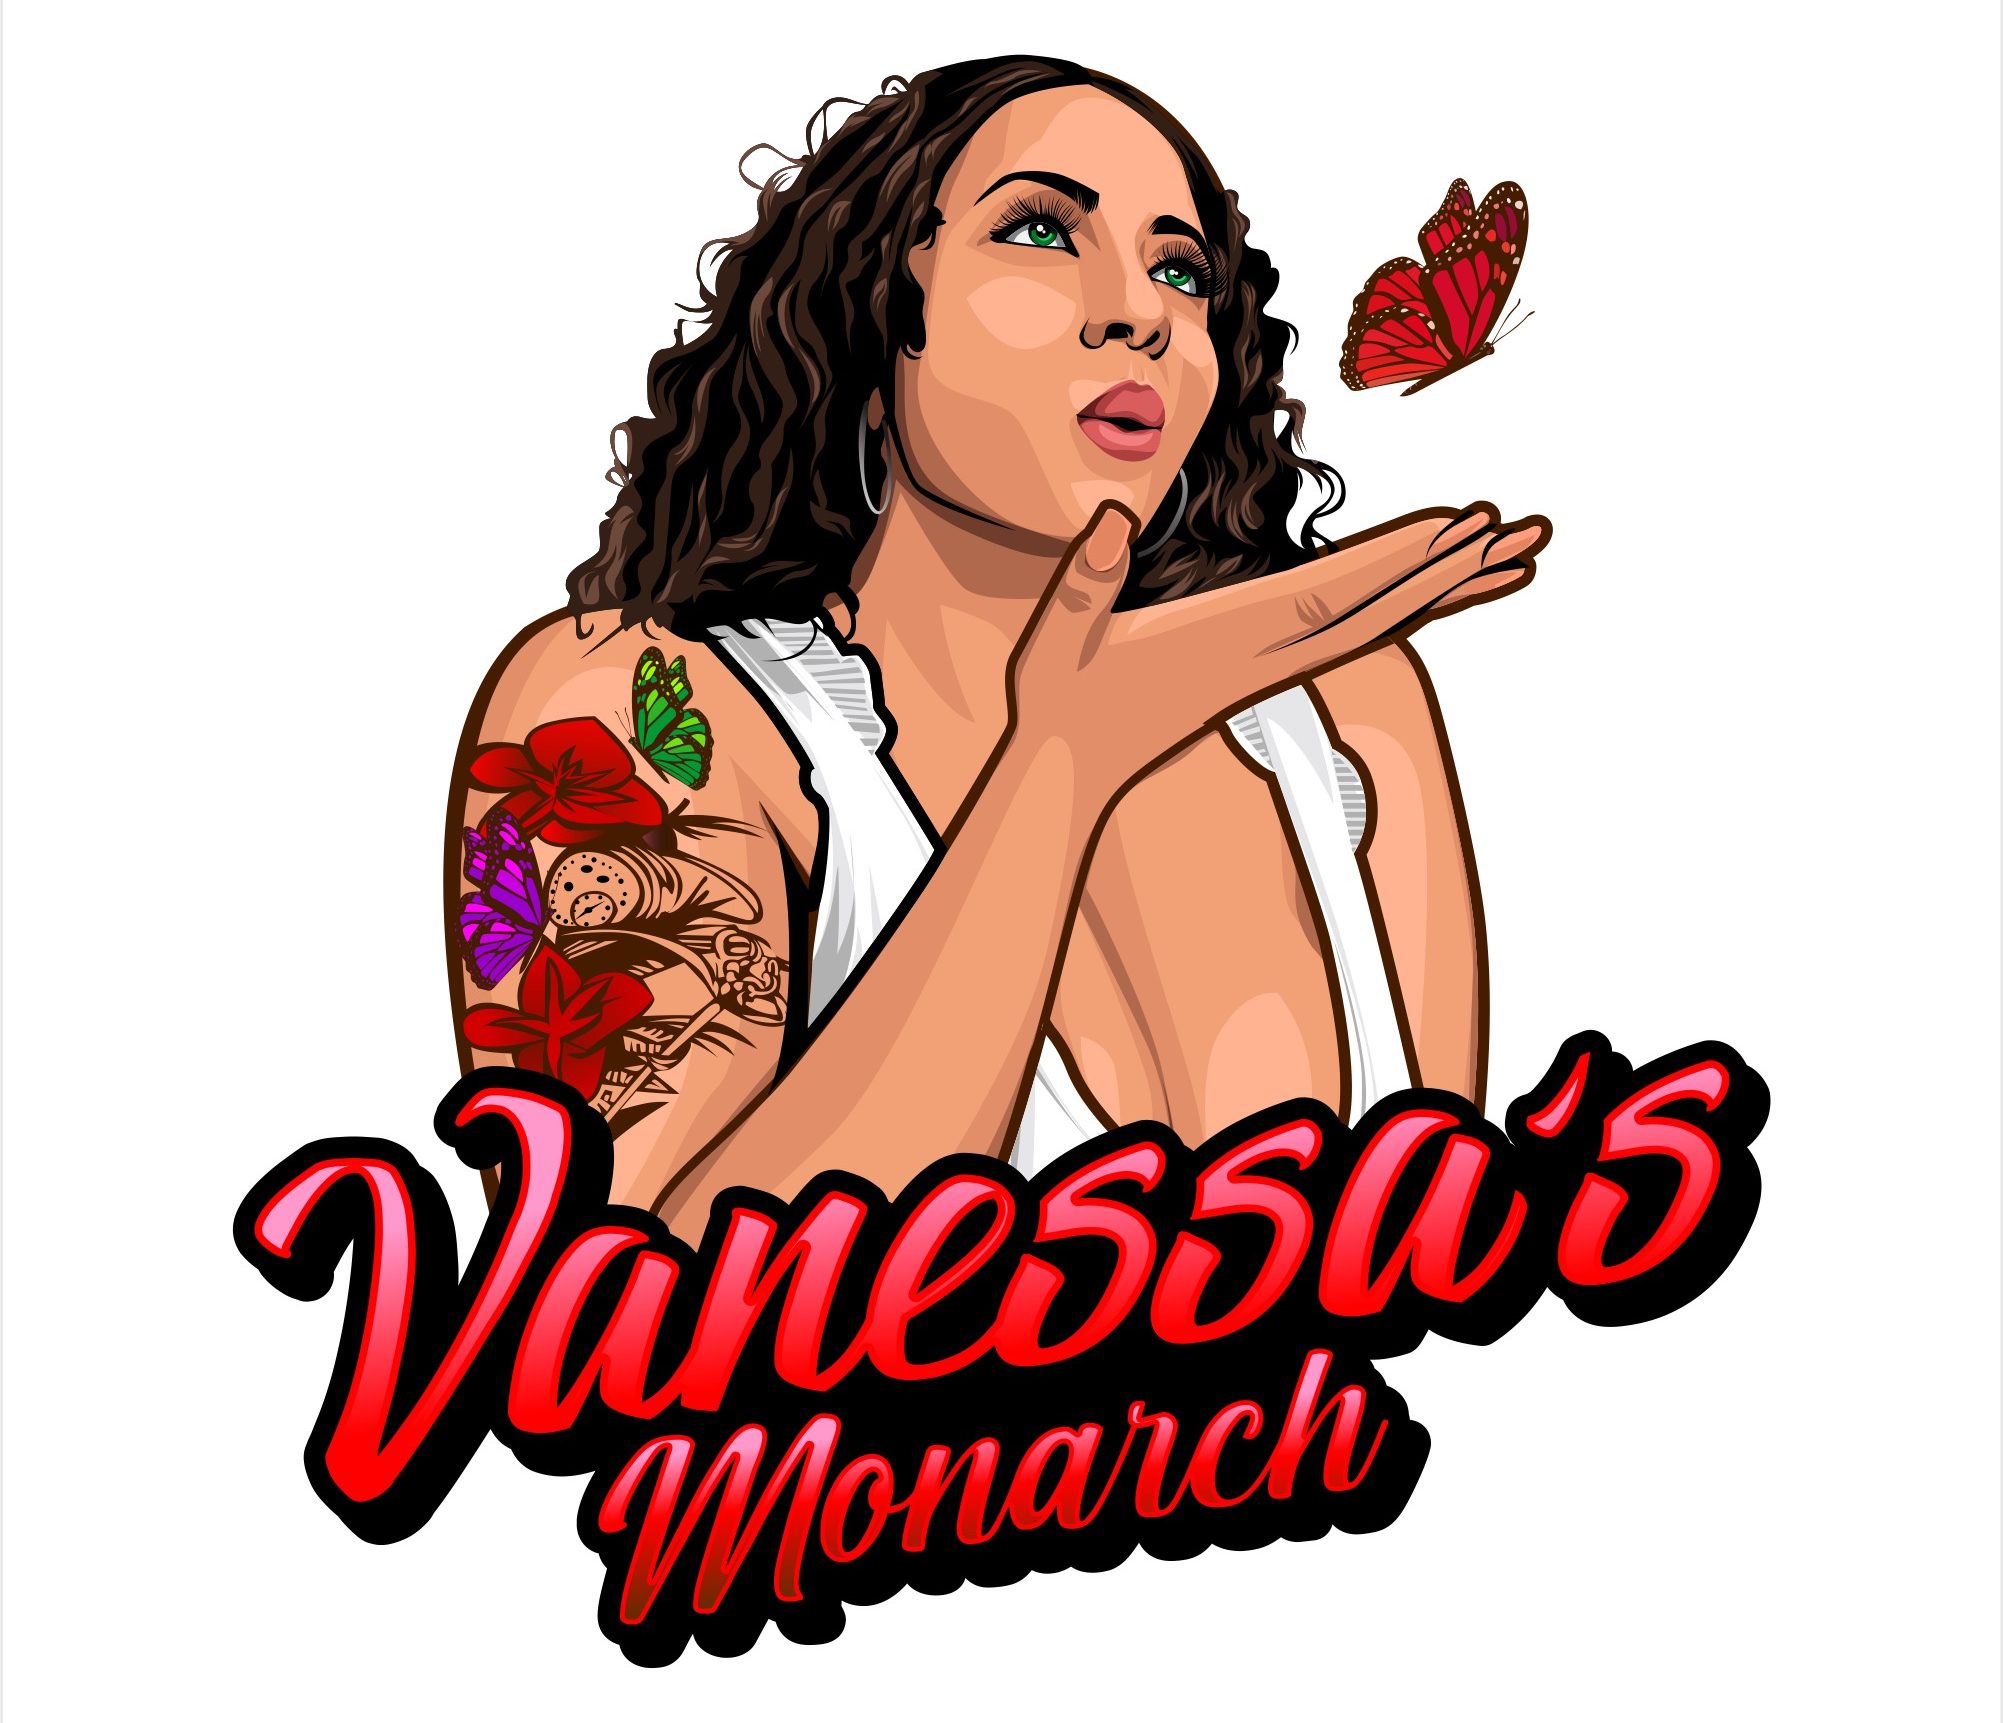 Vanessa's Monarch